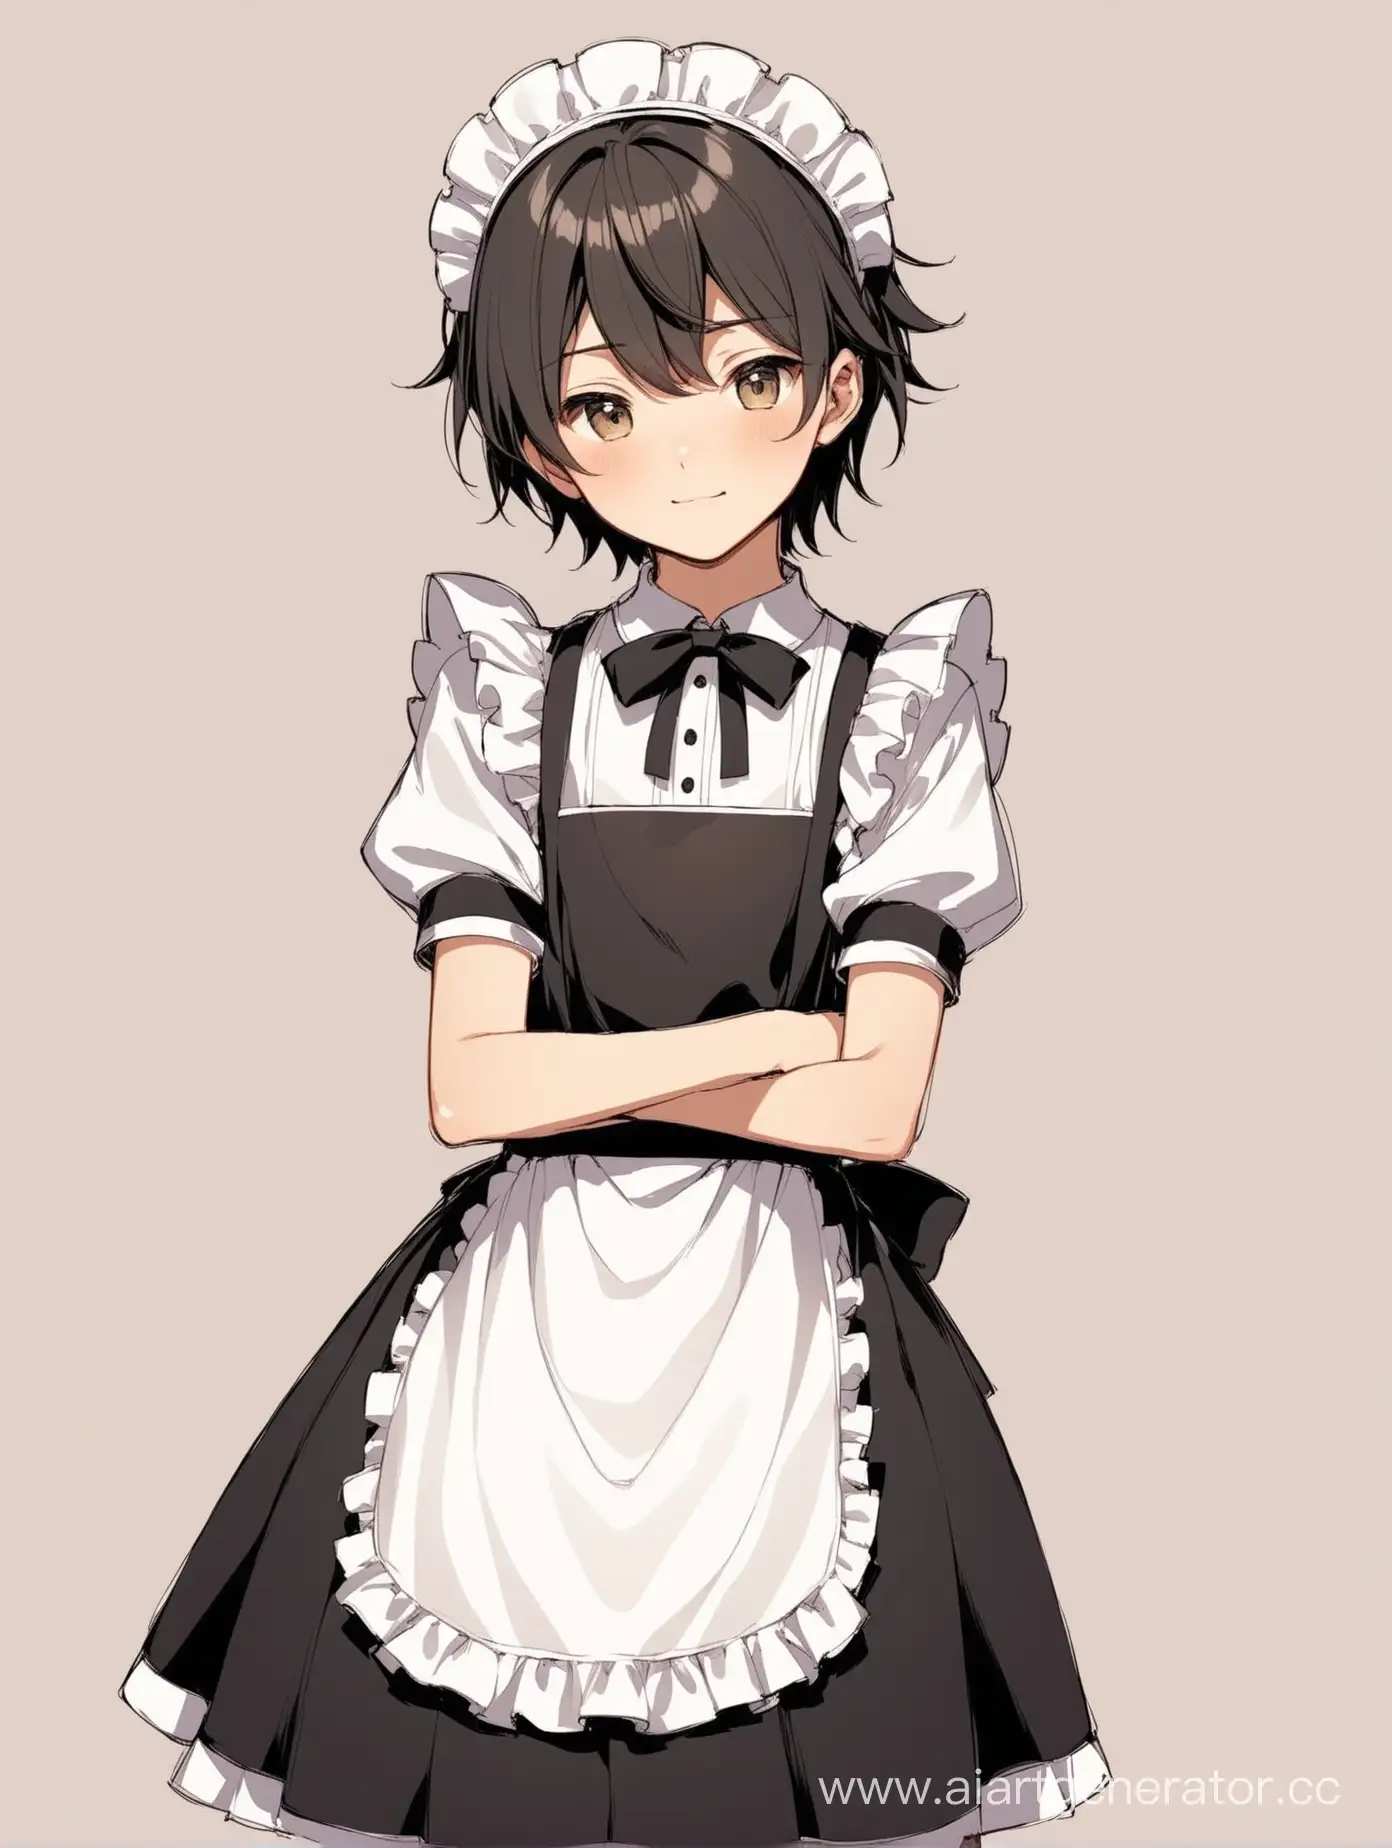 Maid-Costume-Worn-by-a-13YearOld-Feminine-Boy